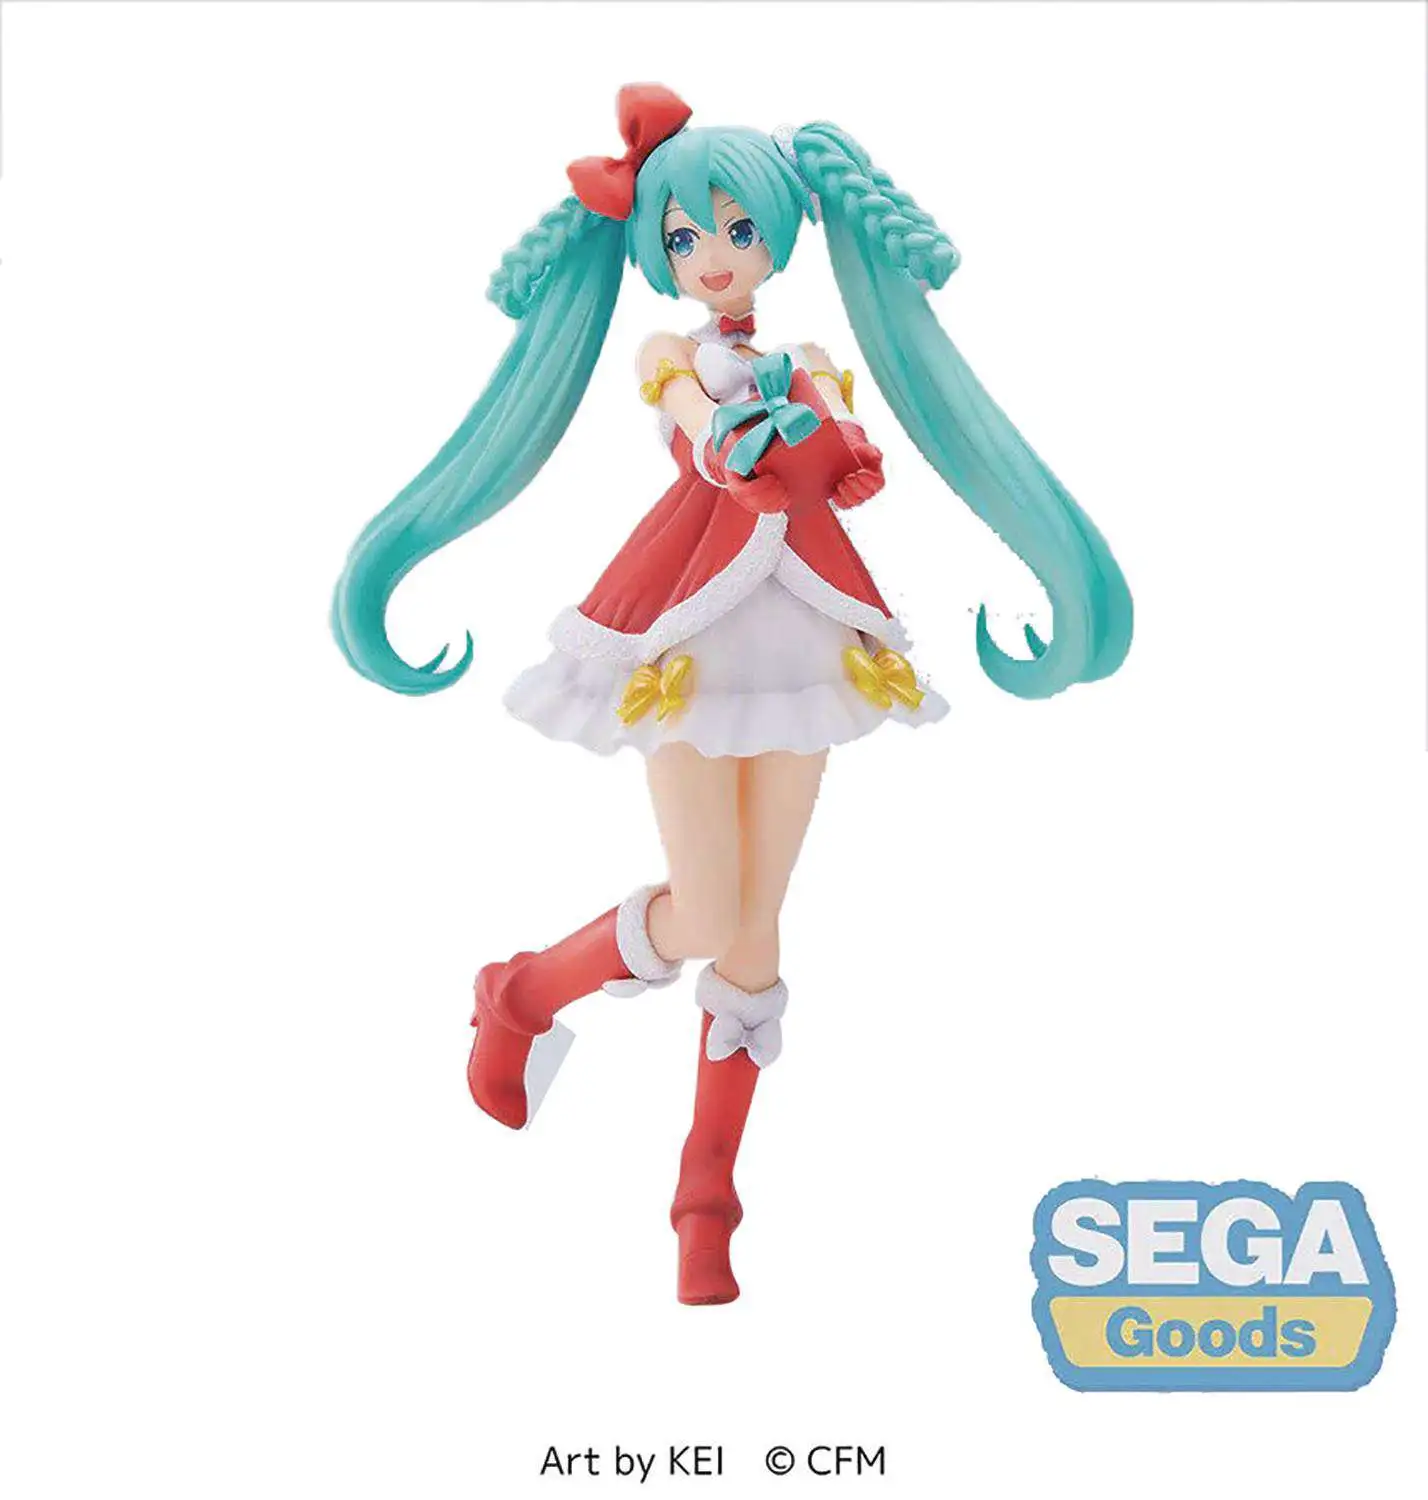 SEGA Goods Hatsune Miku SPM Figure Christmas 2022 8.3" Collectible PVC Figure (Pre-Order ships February 2023)